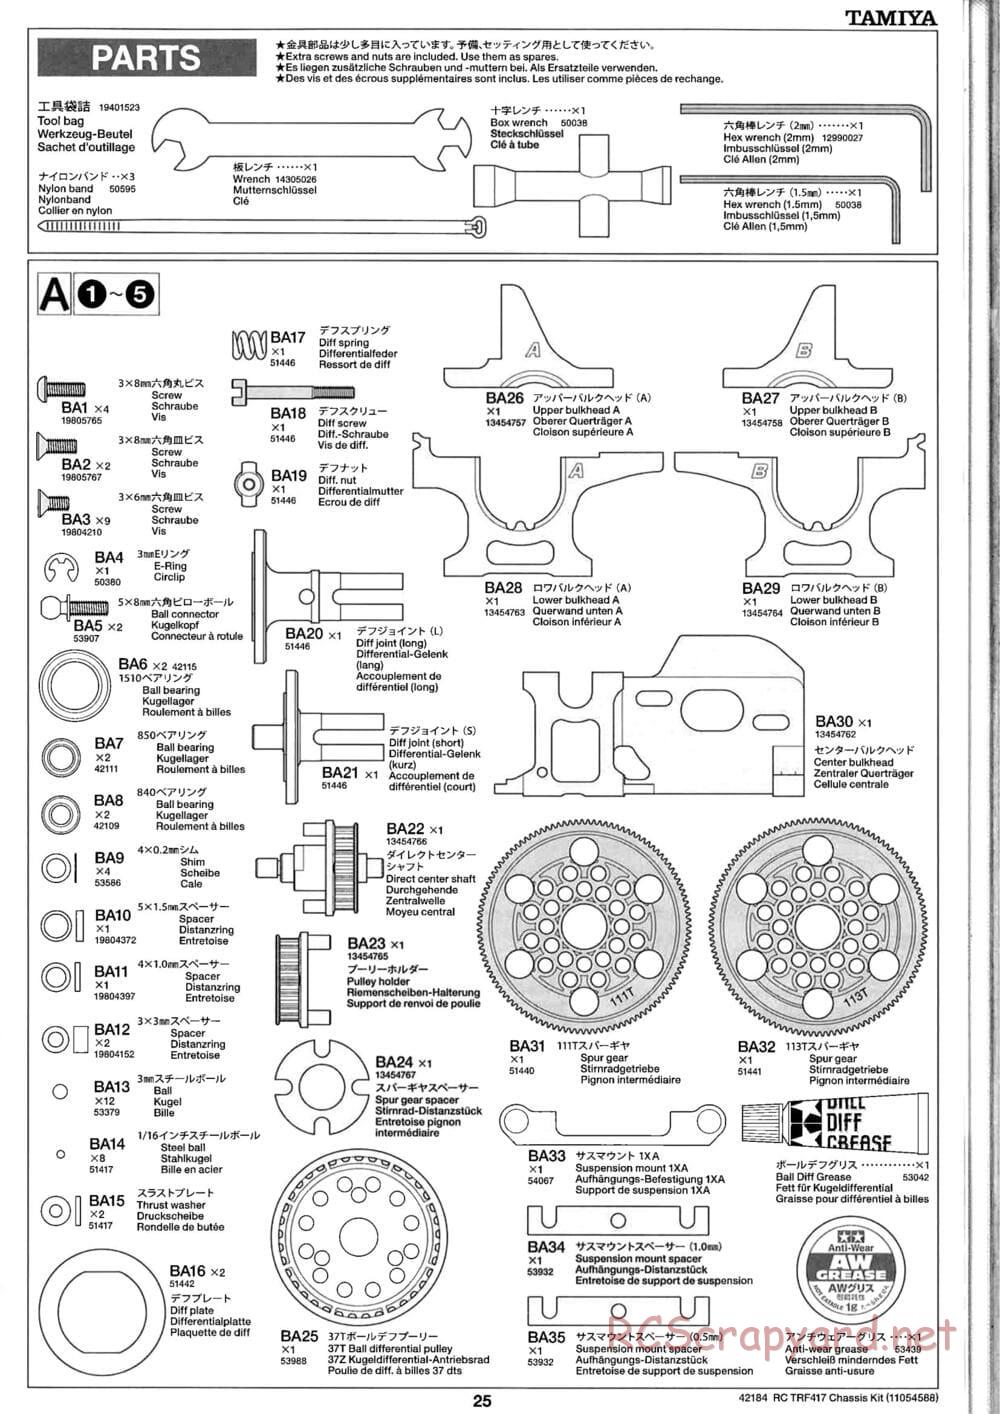 Tamiya - TRF417 Chassis - Manual - Page 25